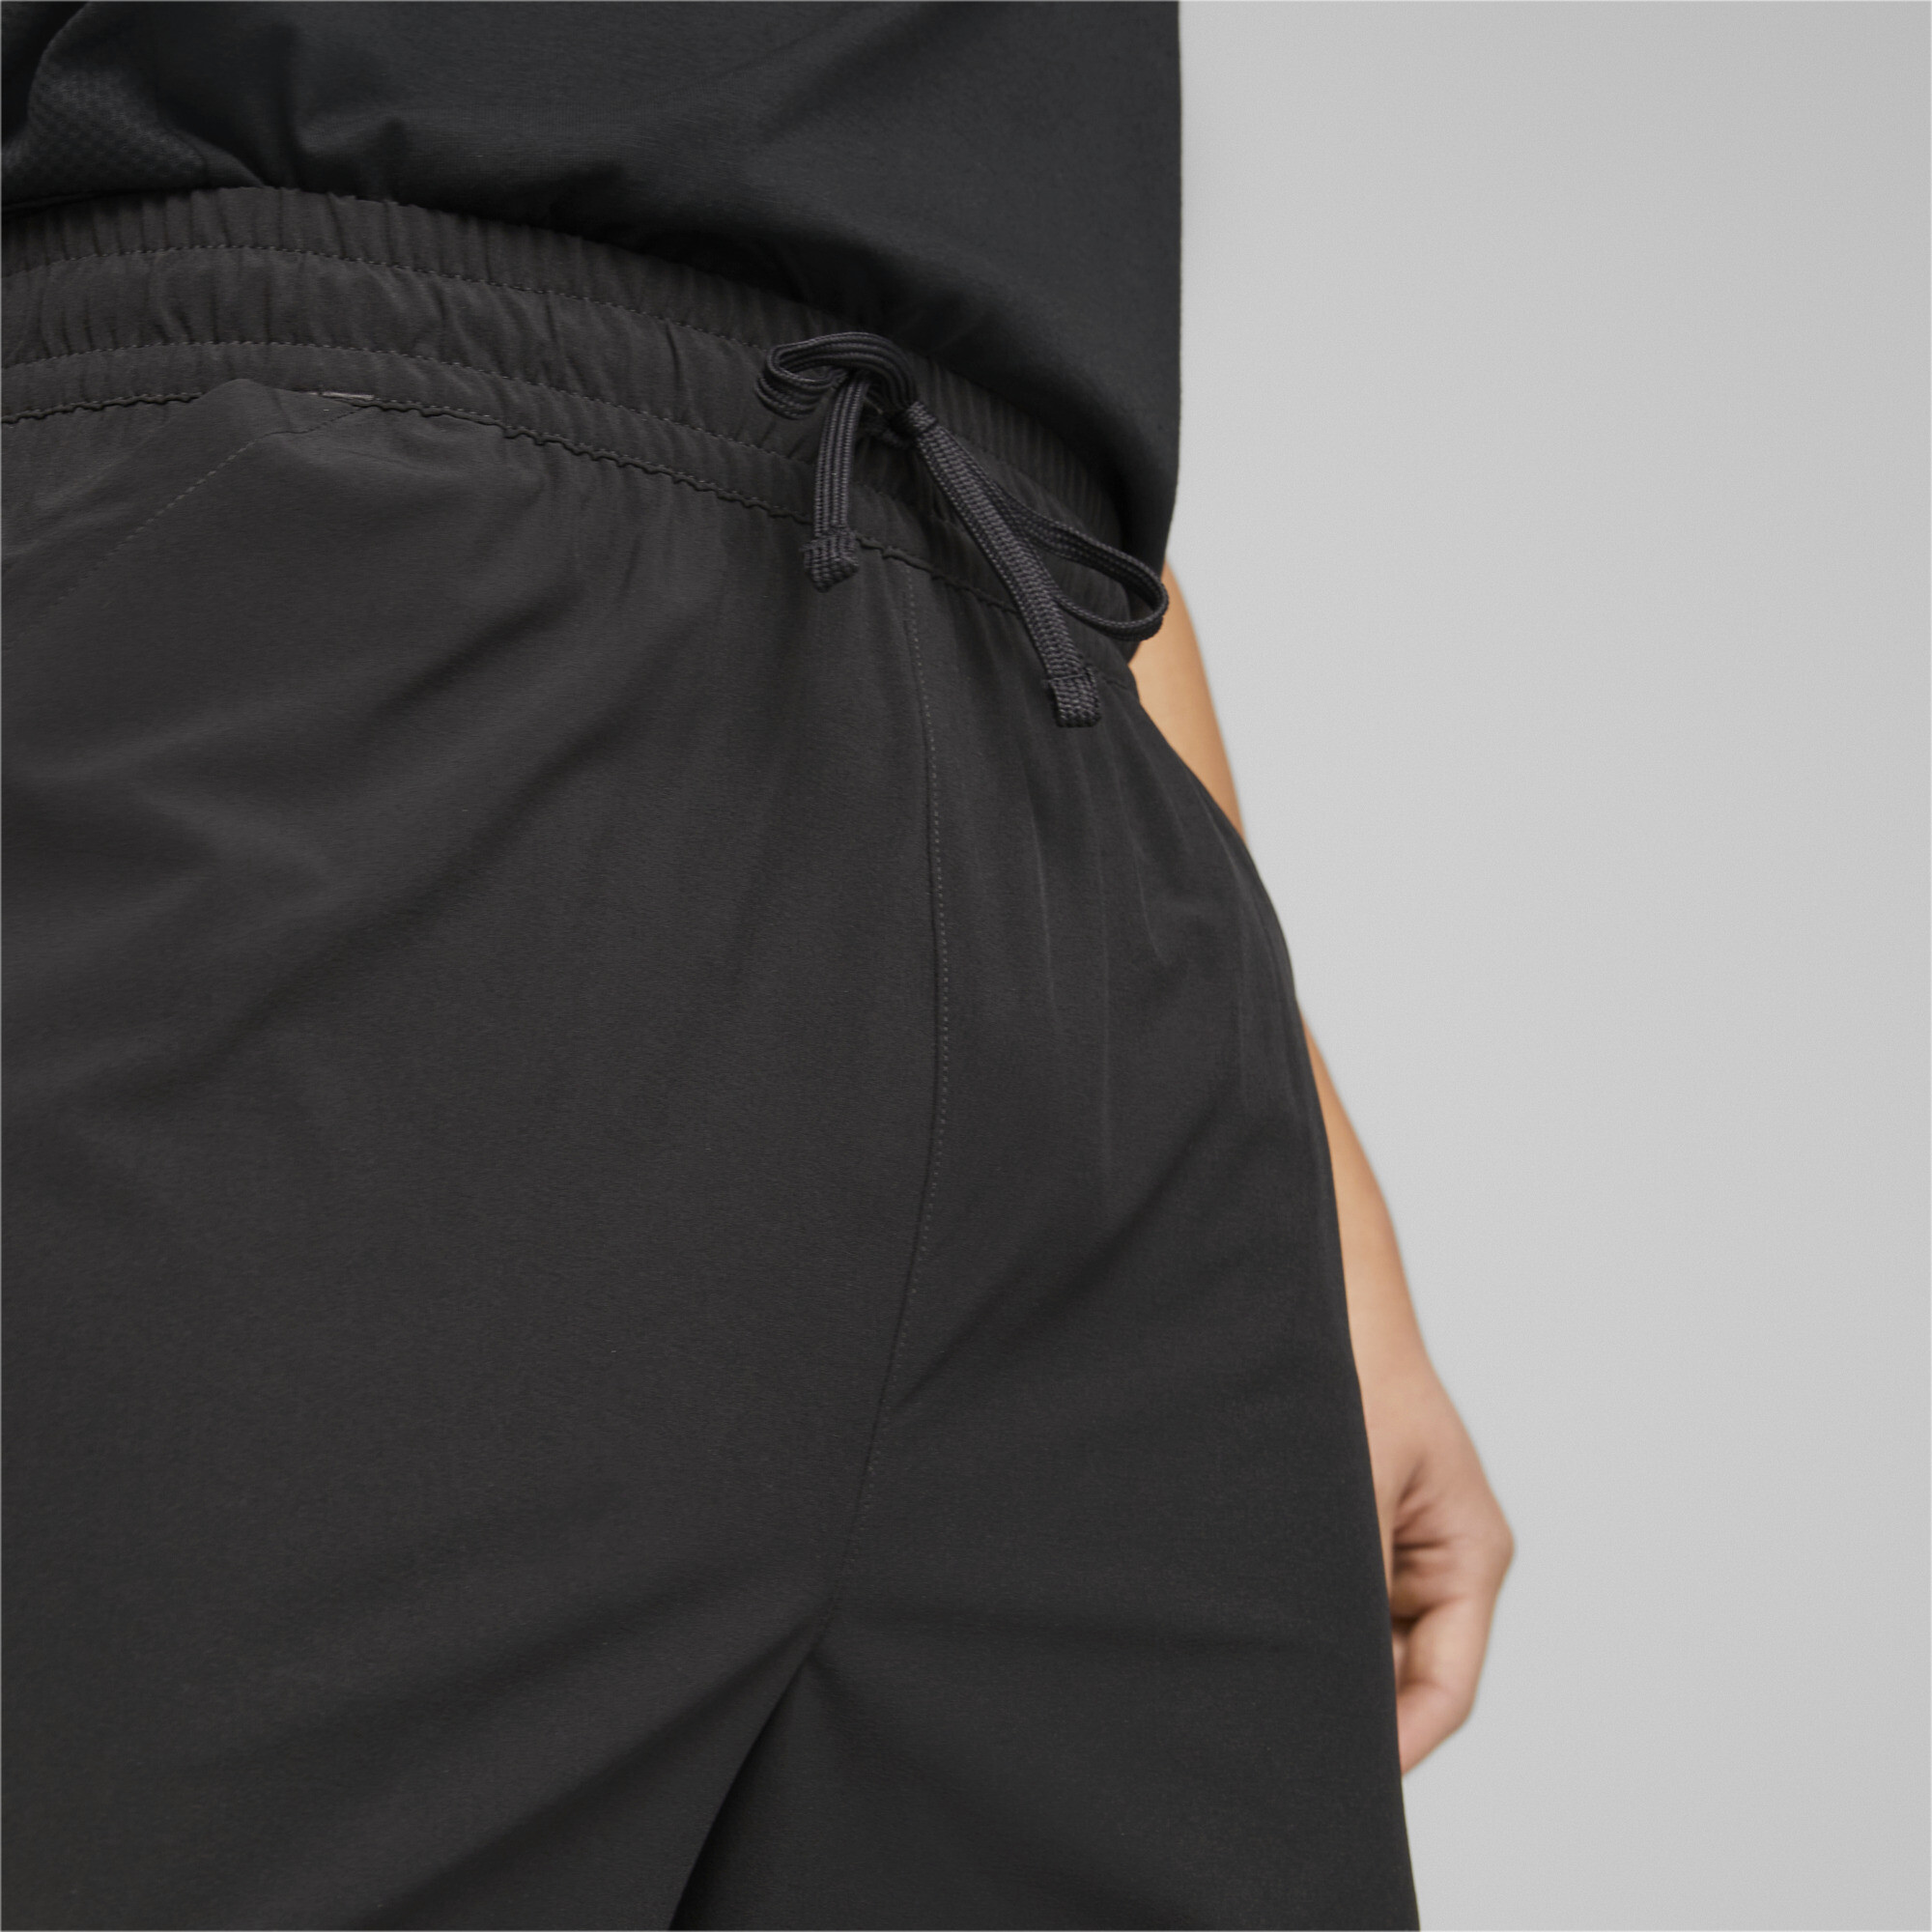 Men's PUMA Fit 7 Stretch Woven Training Shorts Men In Black, Size 2XL